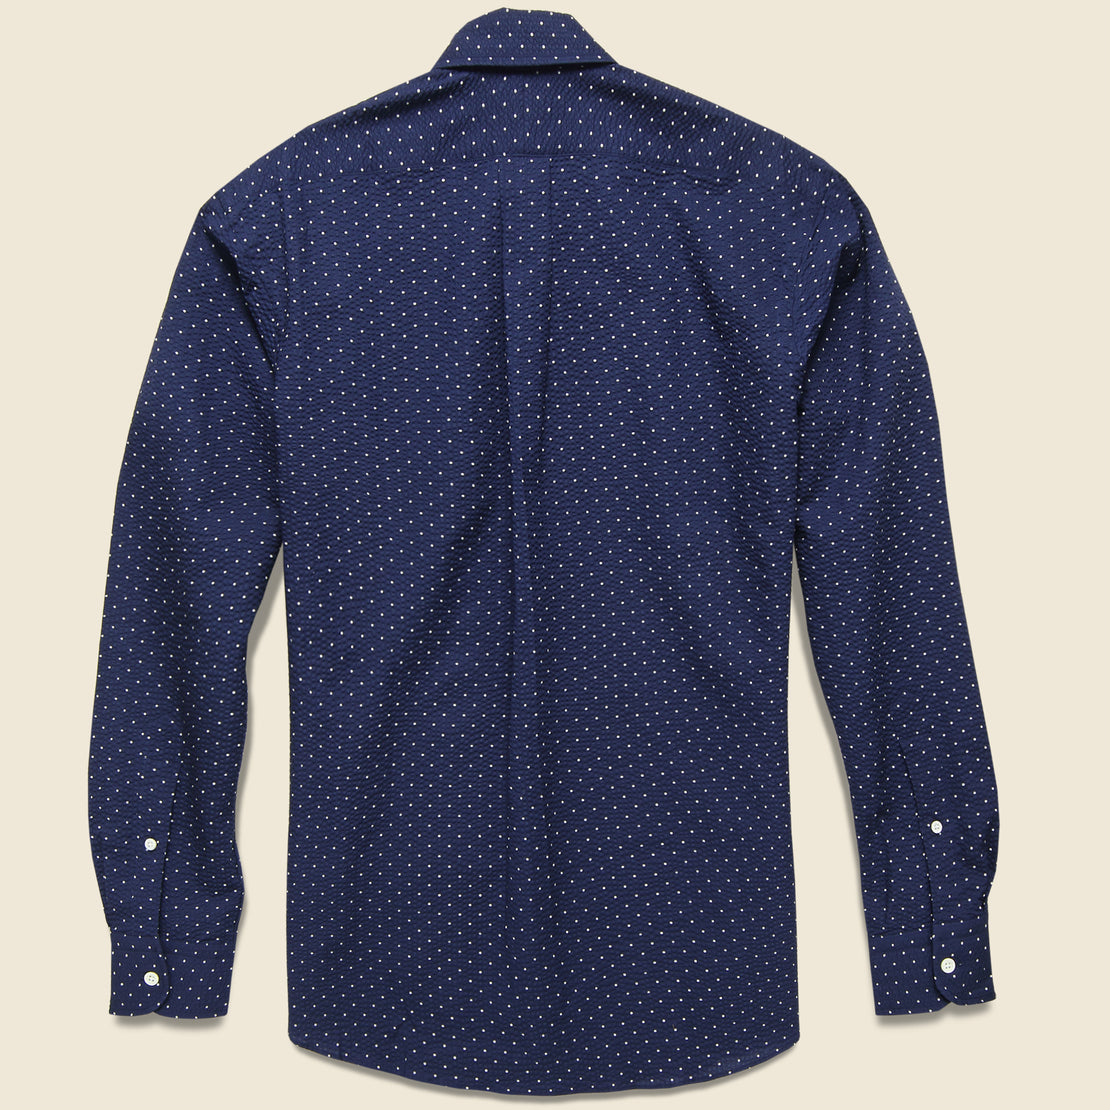 Hamilton - L/S Dot Print Seersucker Shirt, SS19 - Hamilton Shirt Co. - STAG Provisions - Tops - L/S Woven - Dot